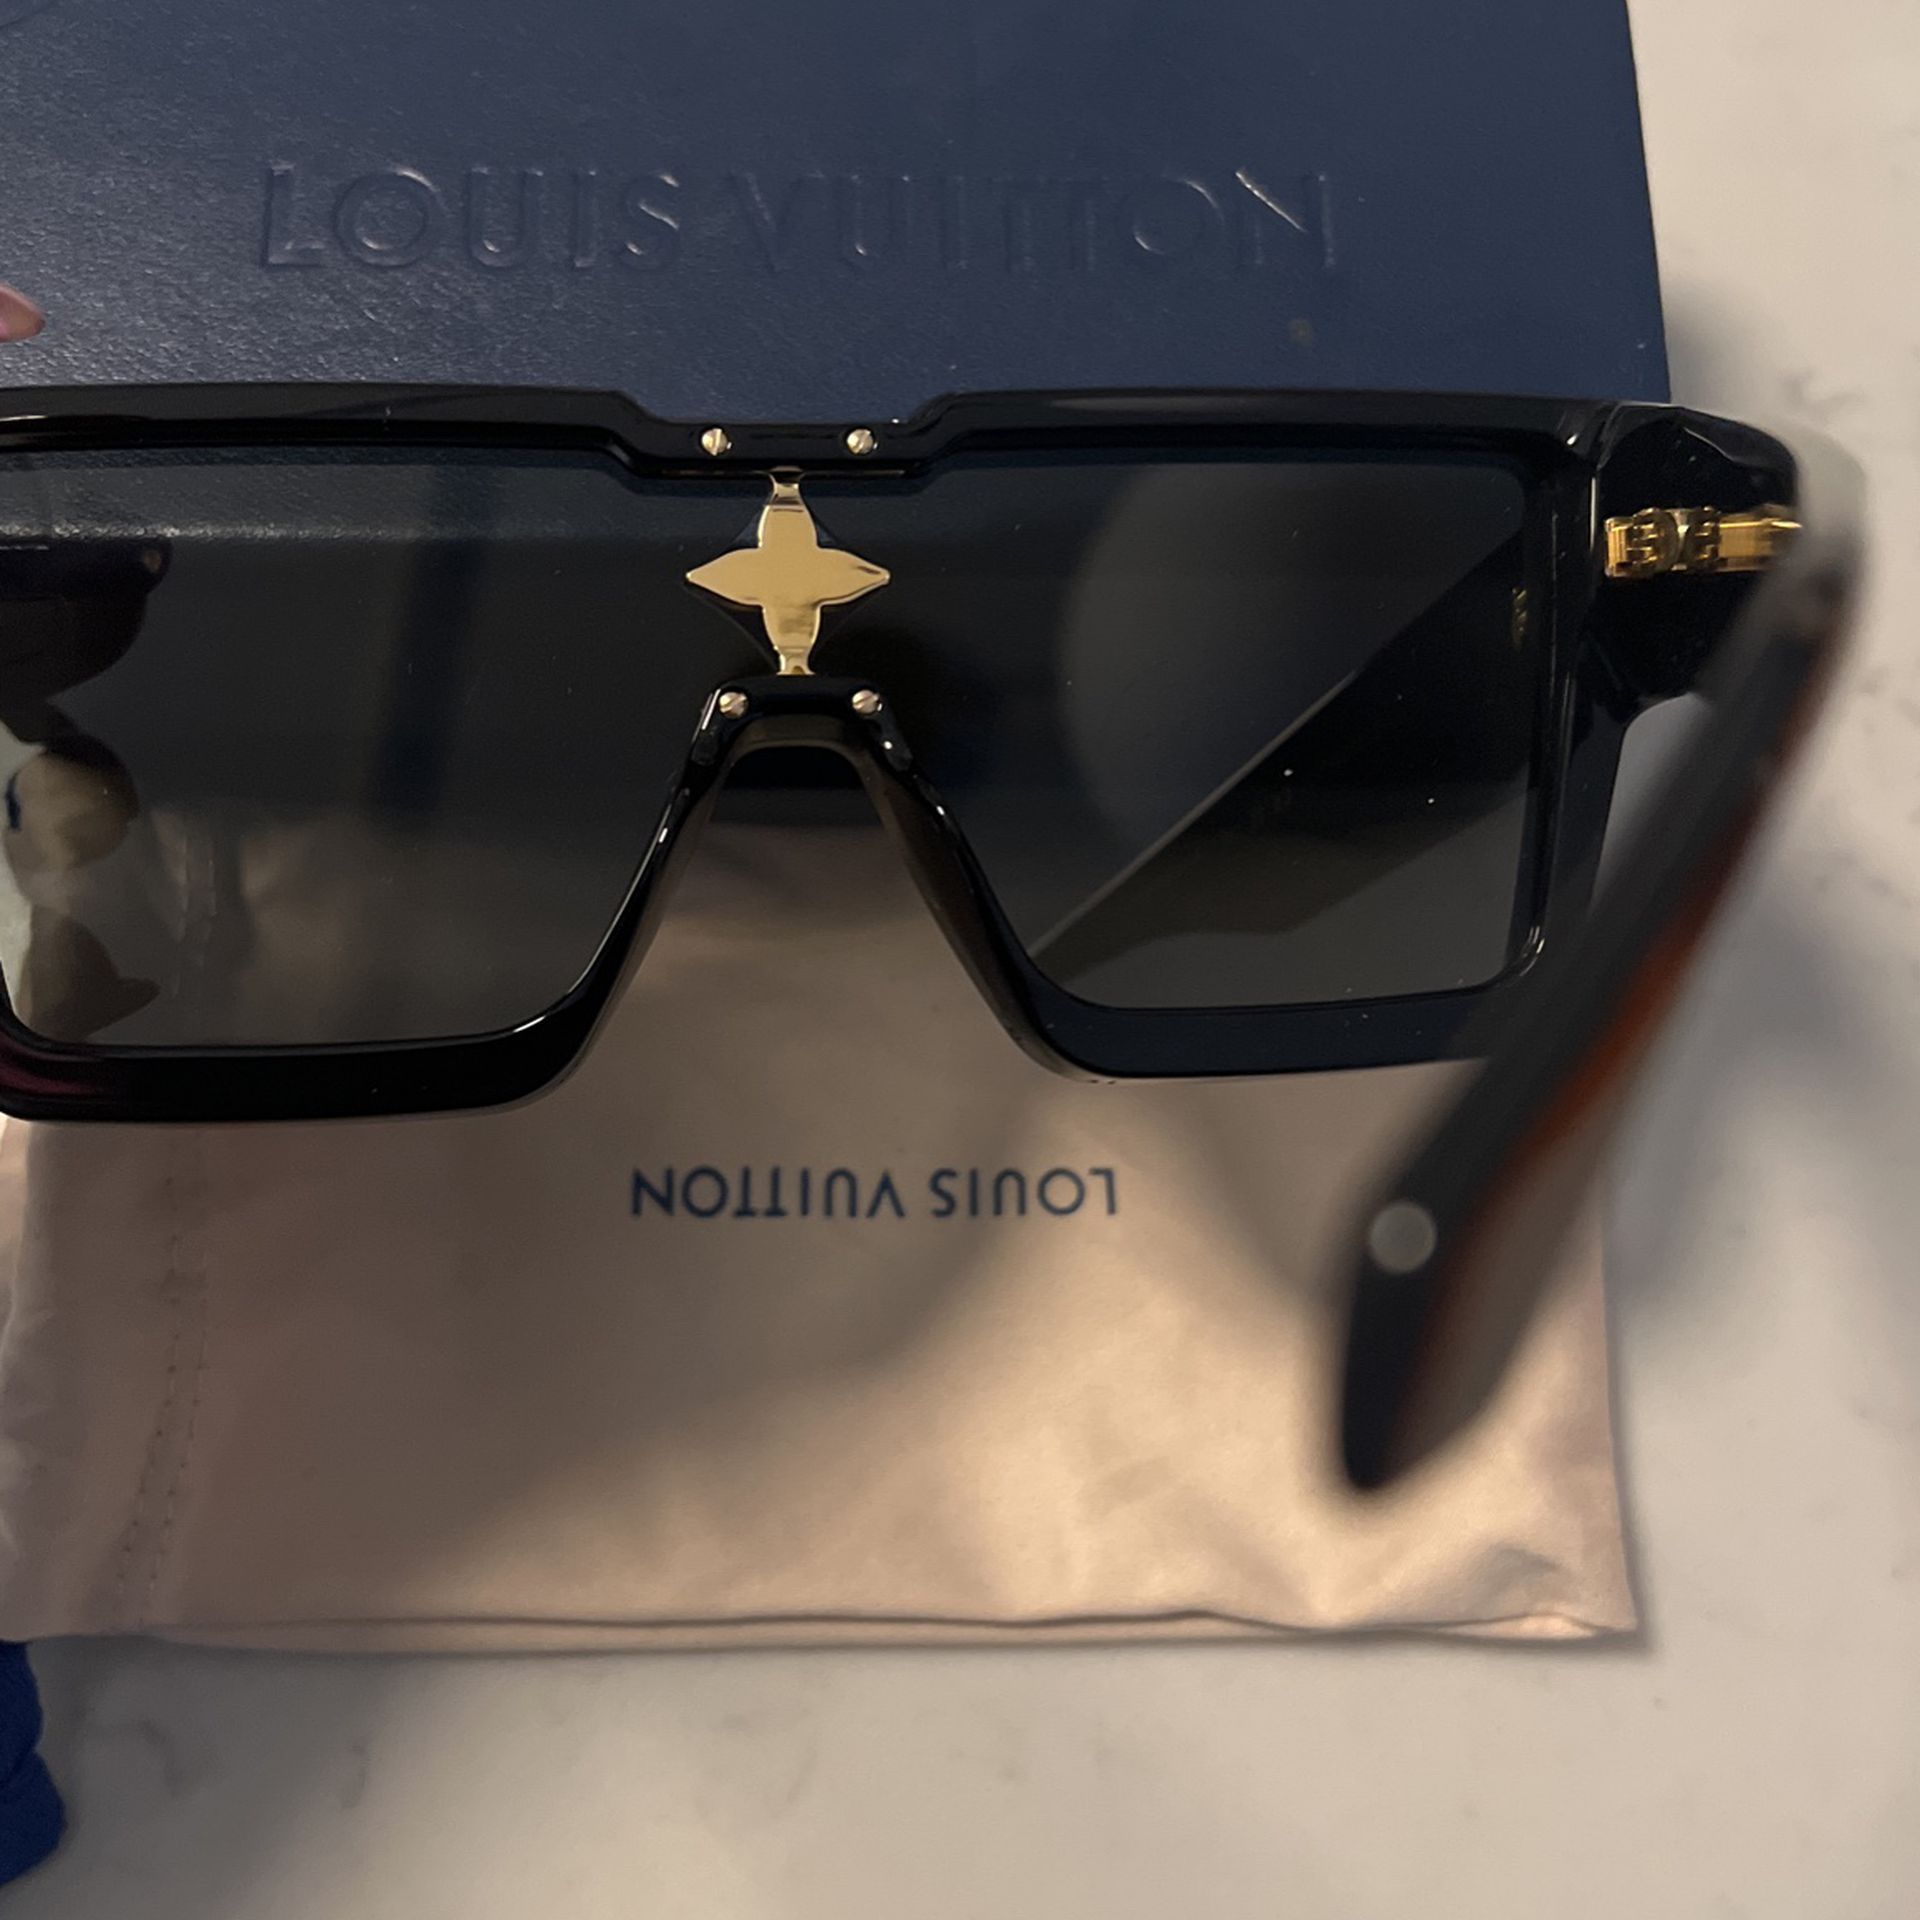 Louis Vuitton Sunglasses, Beige, Women for Sale in Glendale Heights, IL -  OfferUp